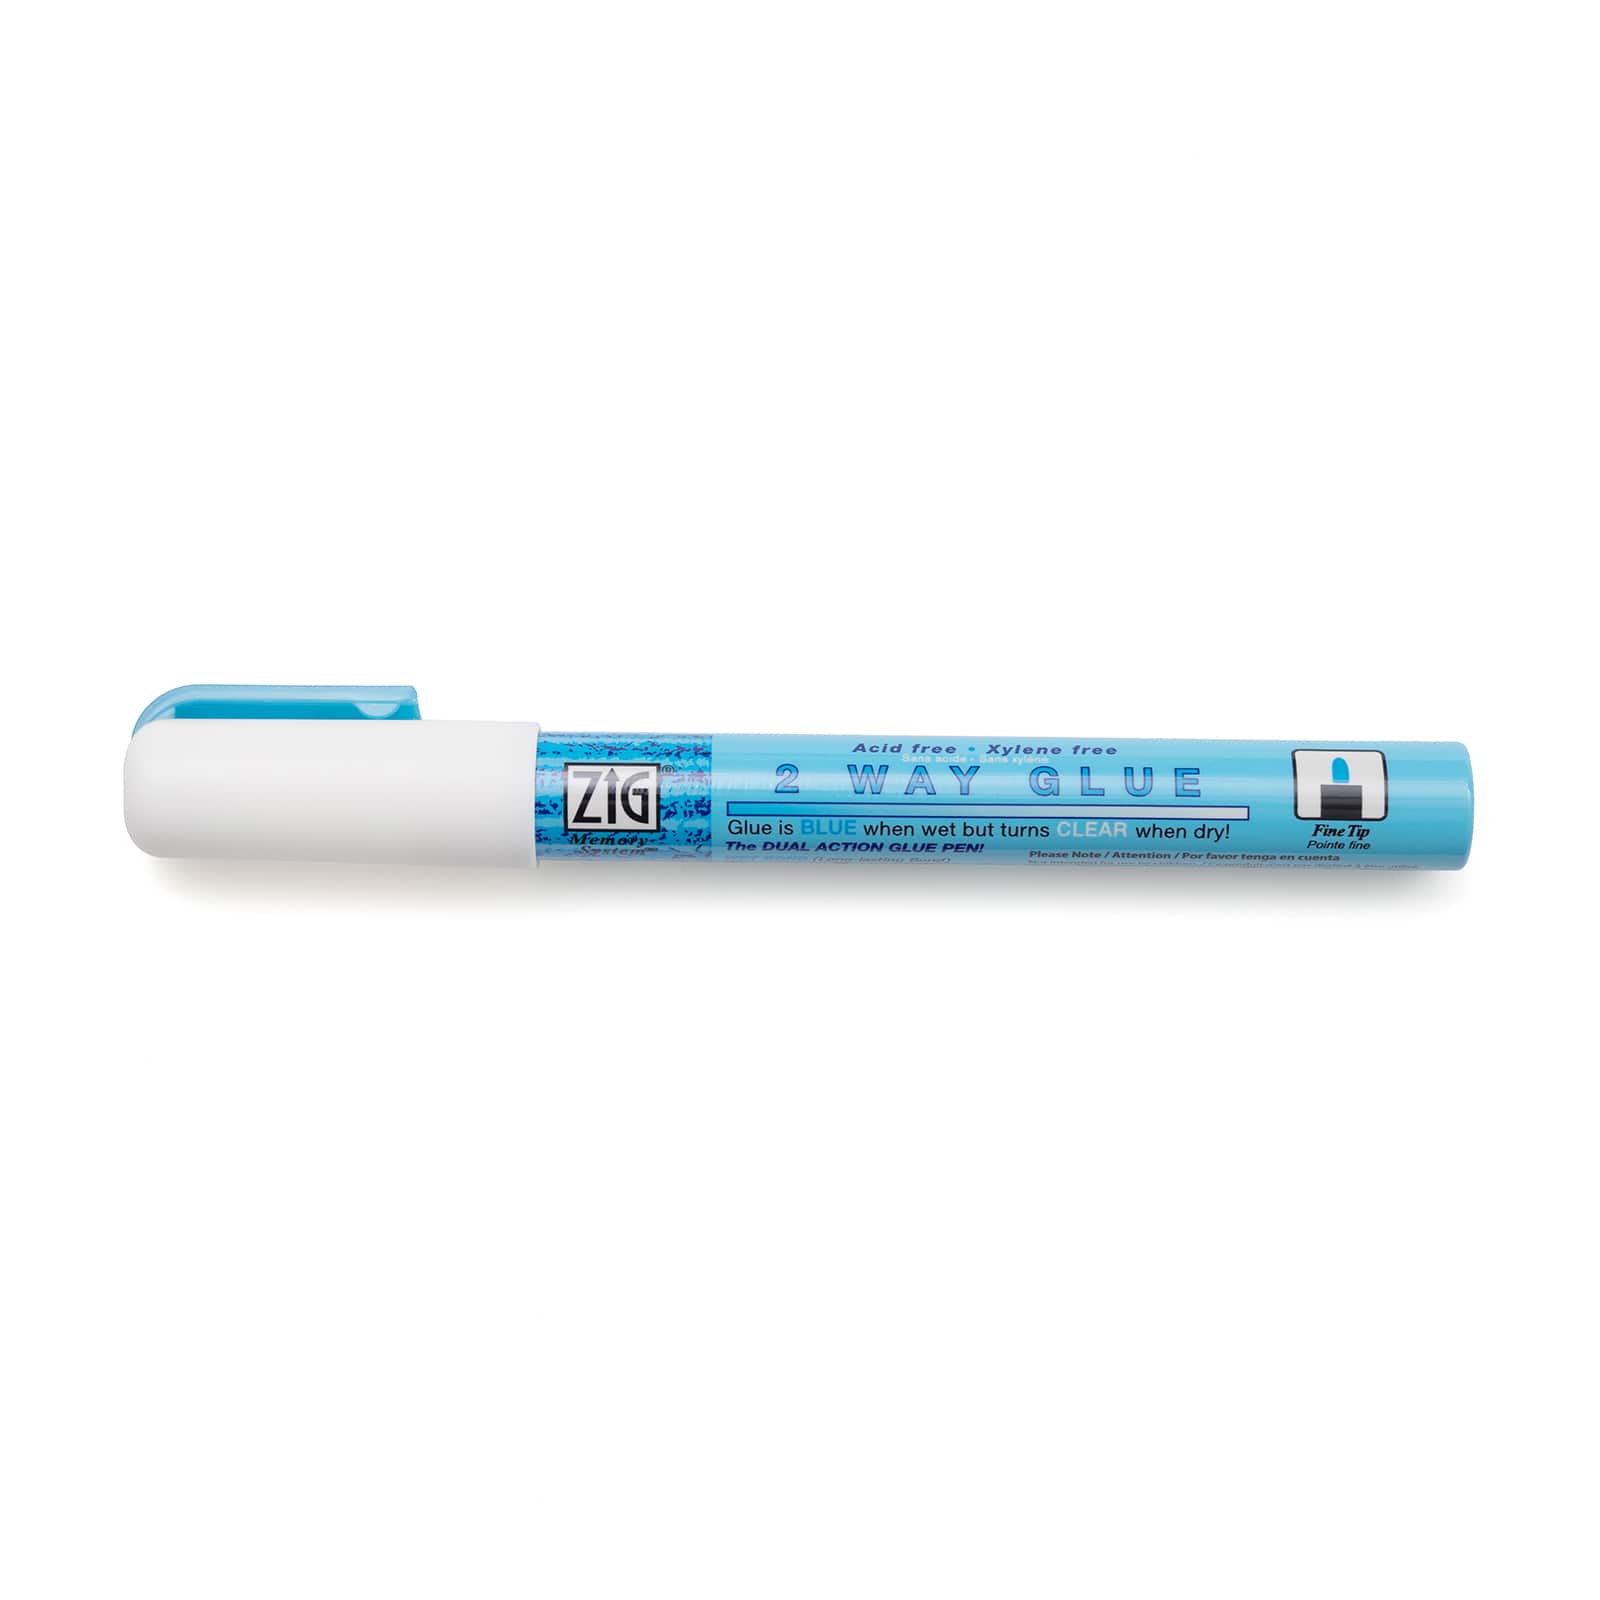 Recollections 2-Way Glue Fine Tip Pen - 0.24 fl oz